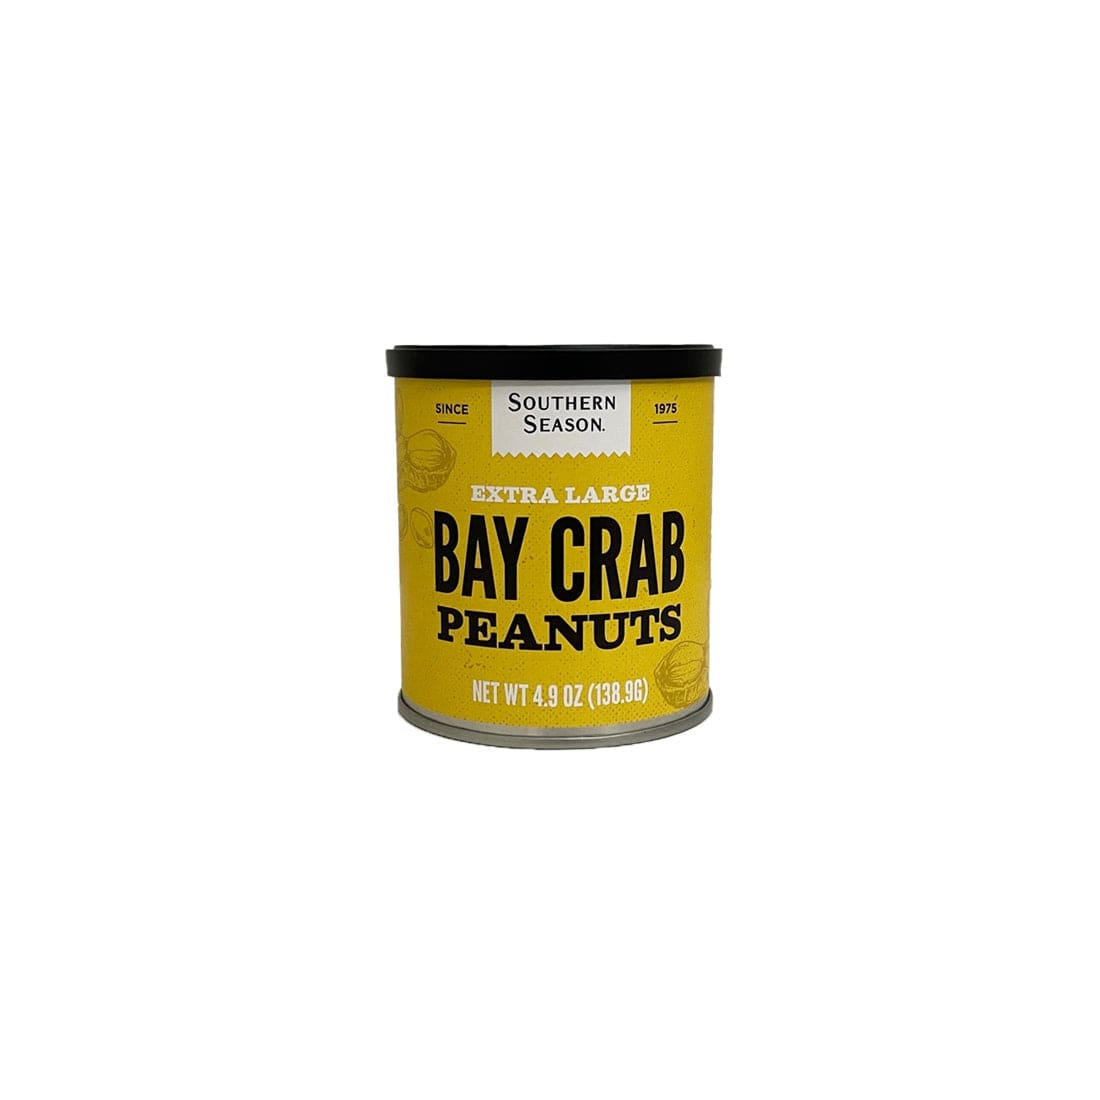 Southern Season Southern Season Bay Crab Peanuts 4.9 oz